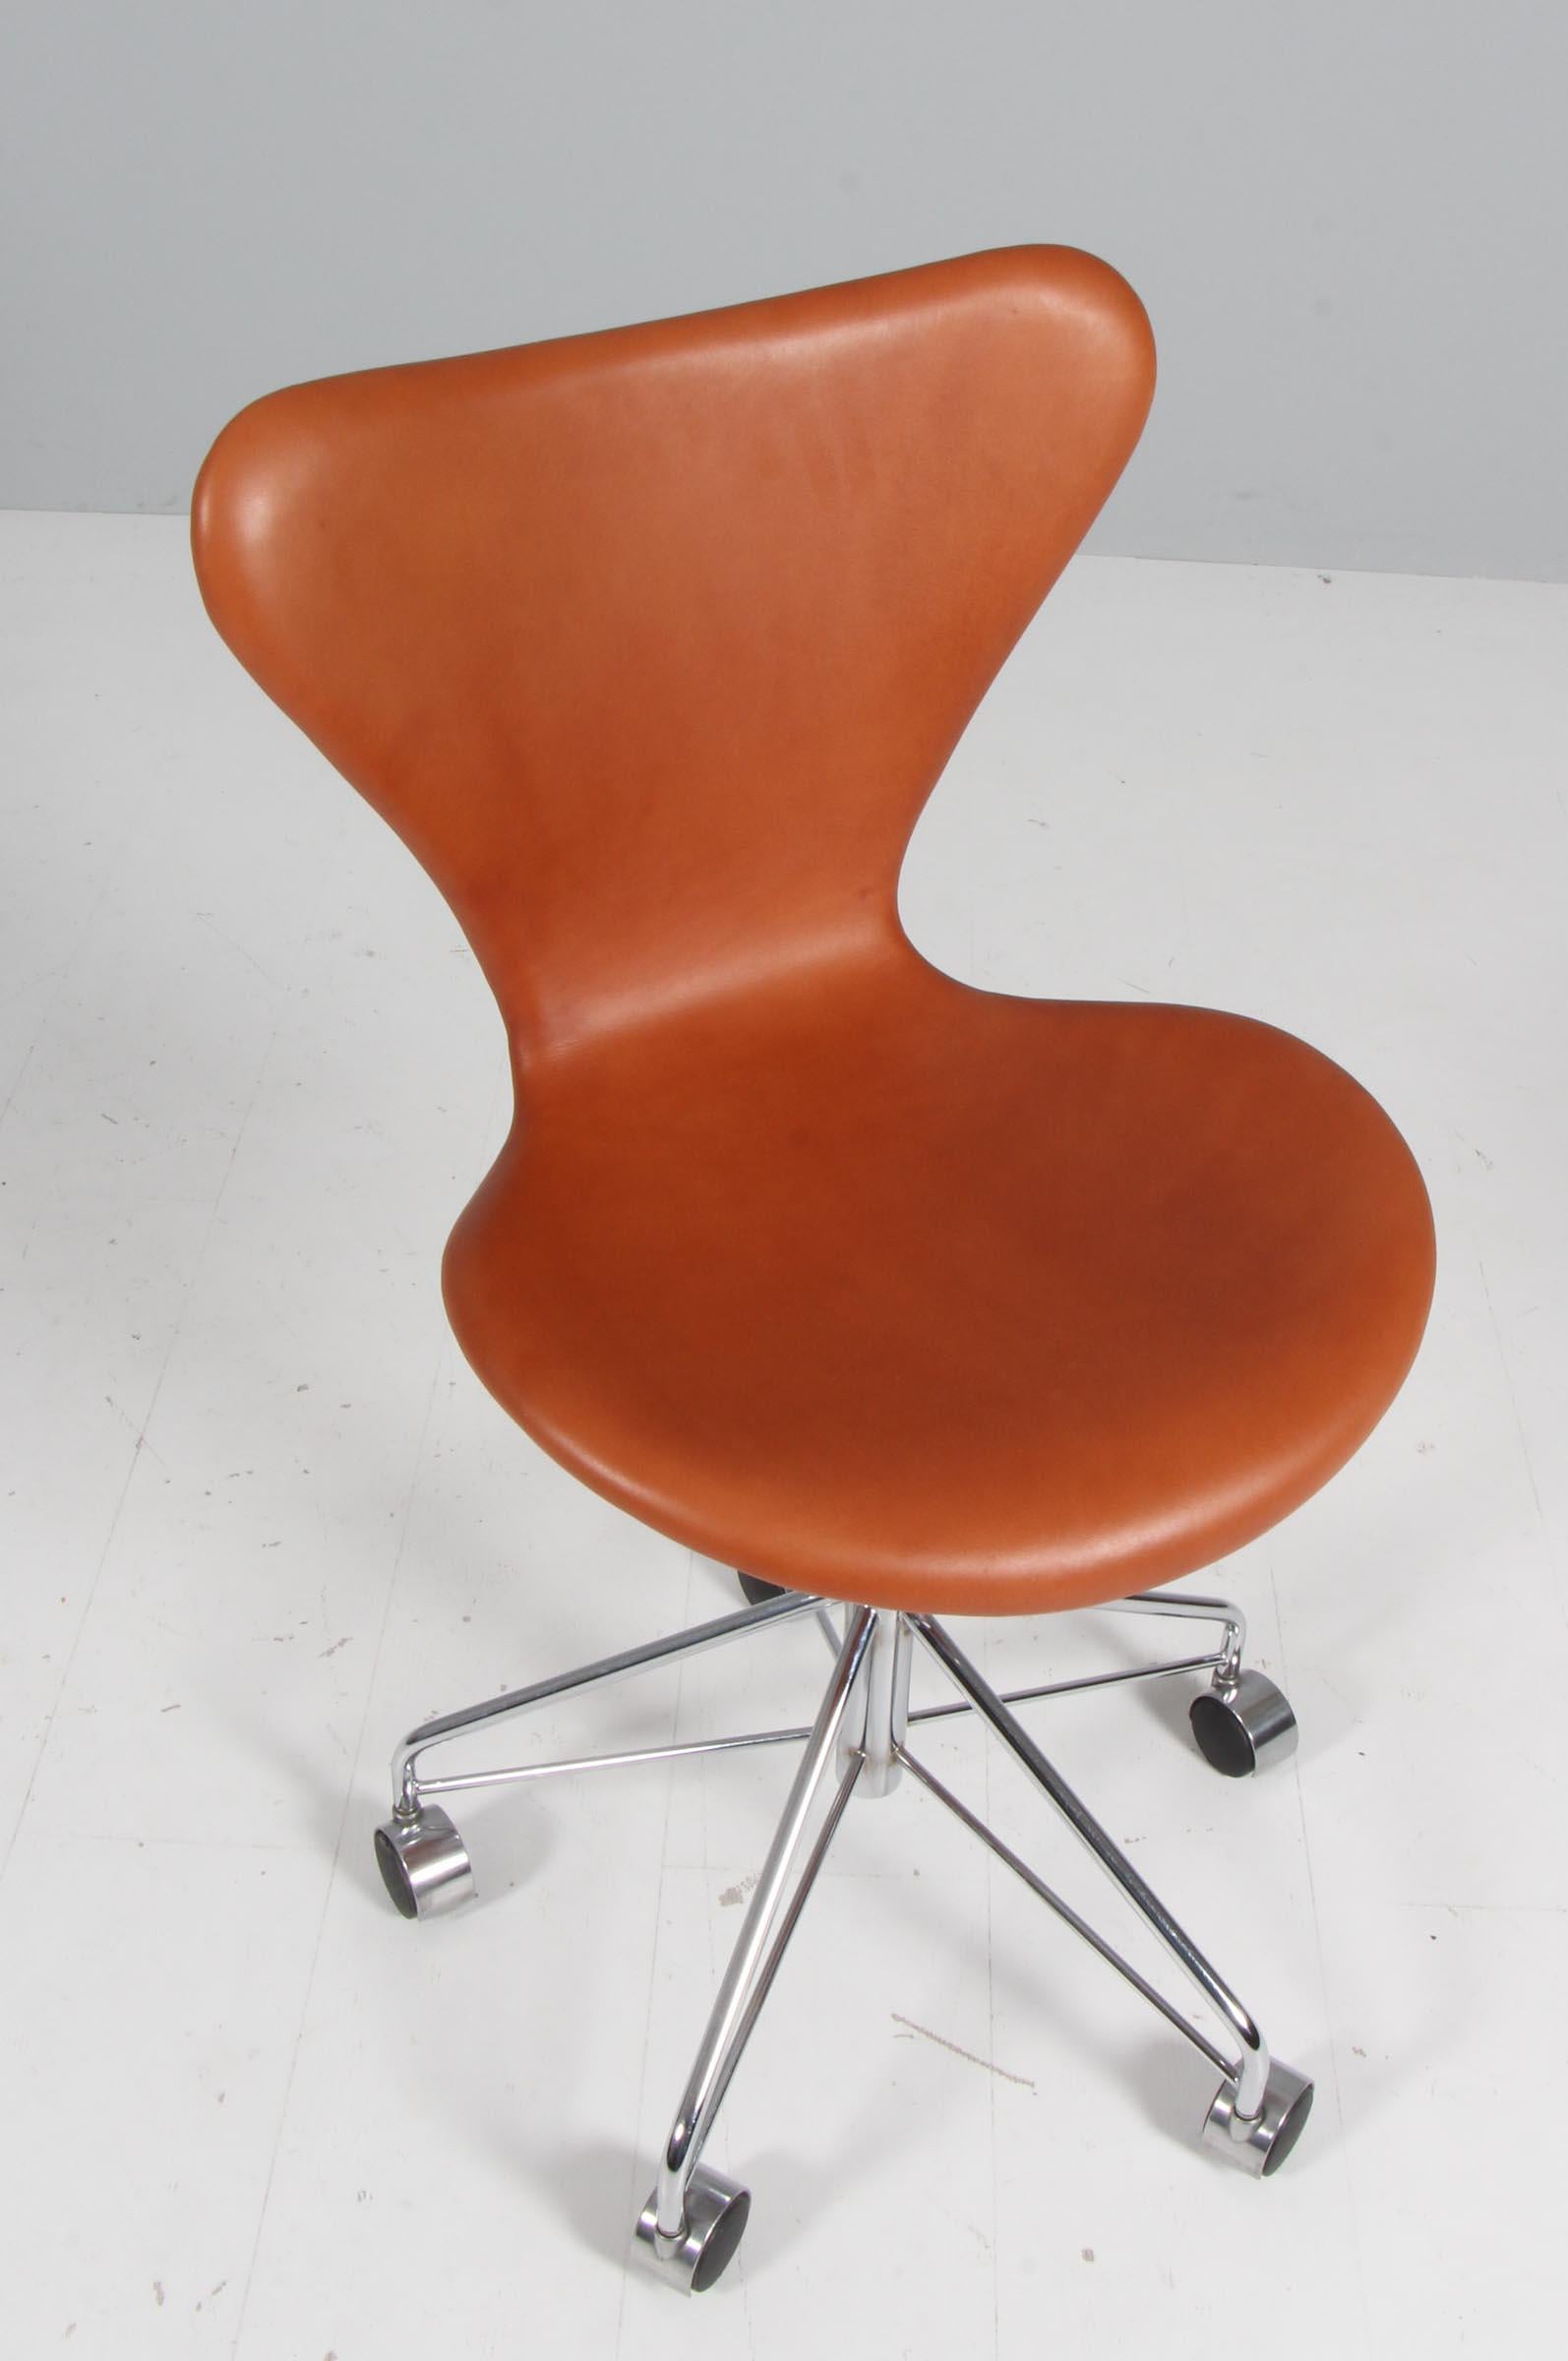 Arne Jacobsen officee chair new upholstered with cognac aniline leather.

Base of chrome steel tube.

Model 3117 Syveren, made by Fritz Hansen.